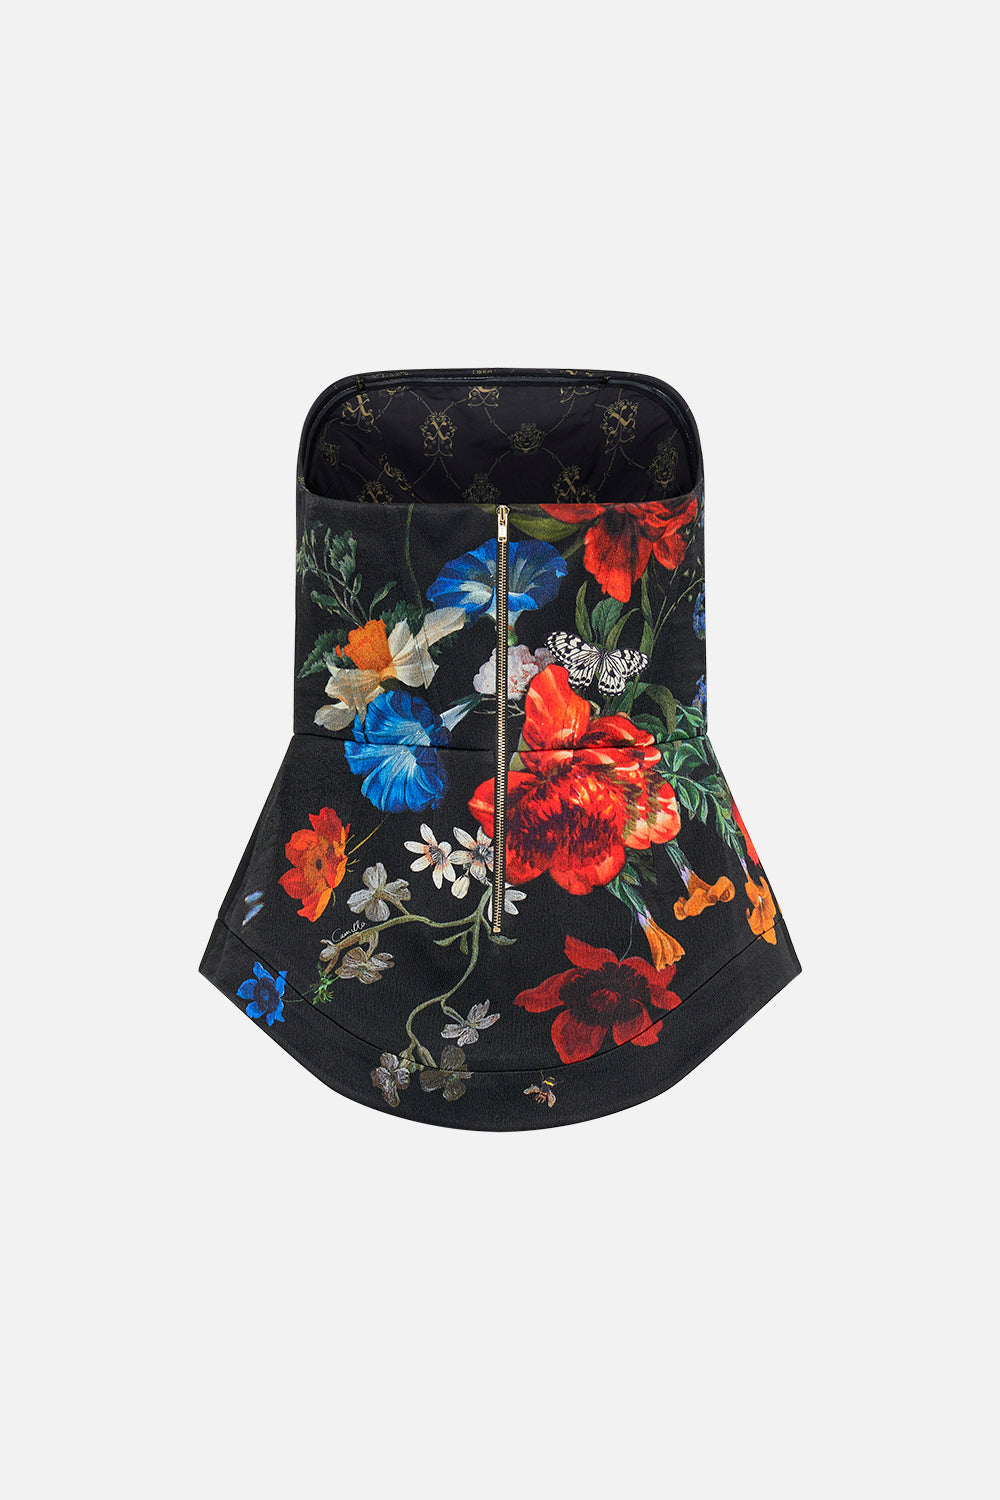 CAMILLA black floral print corset in A Still life print